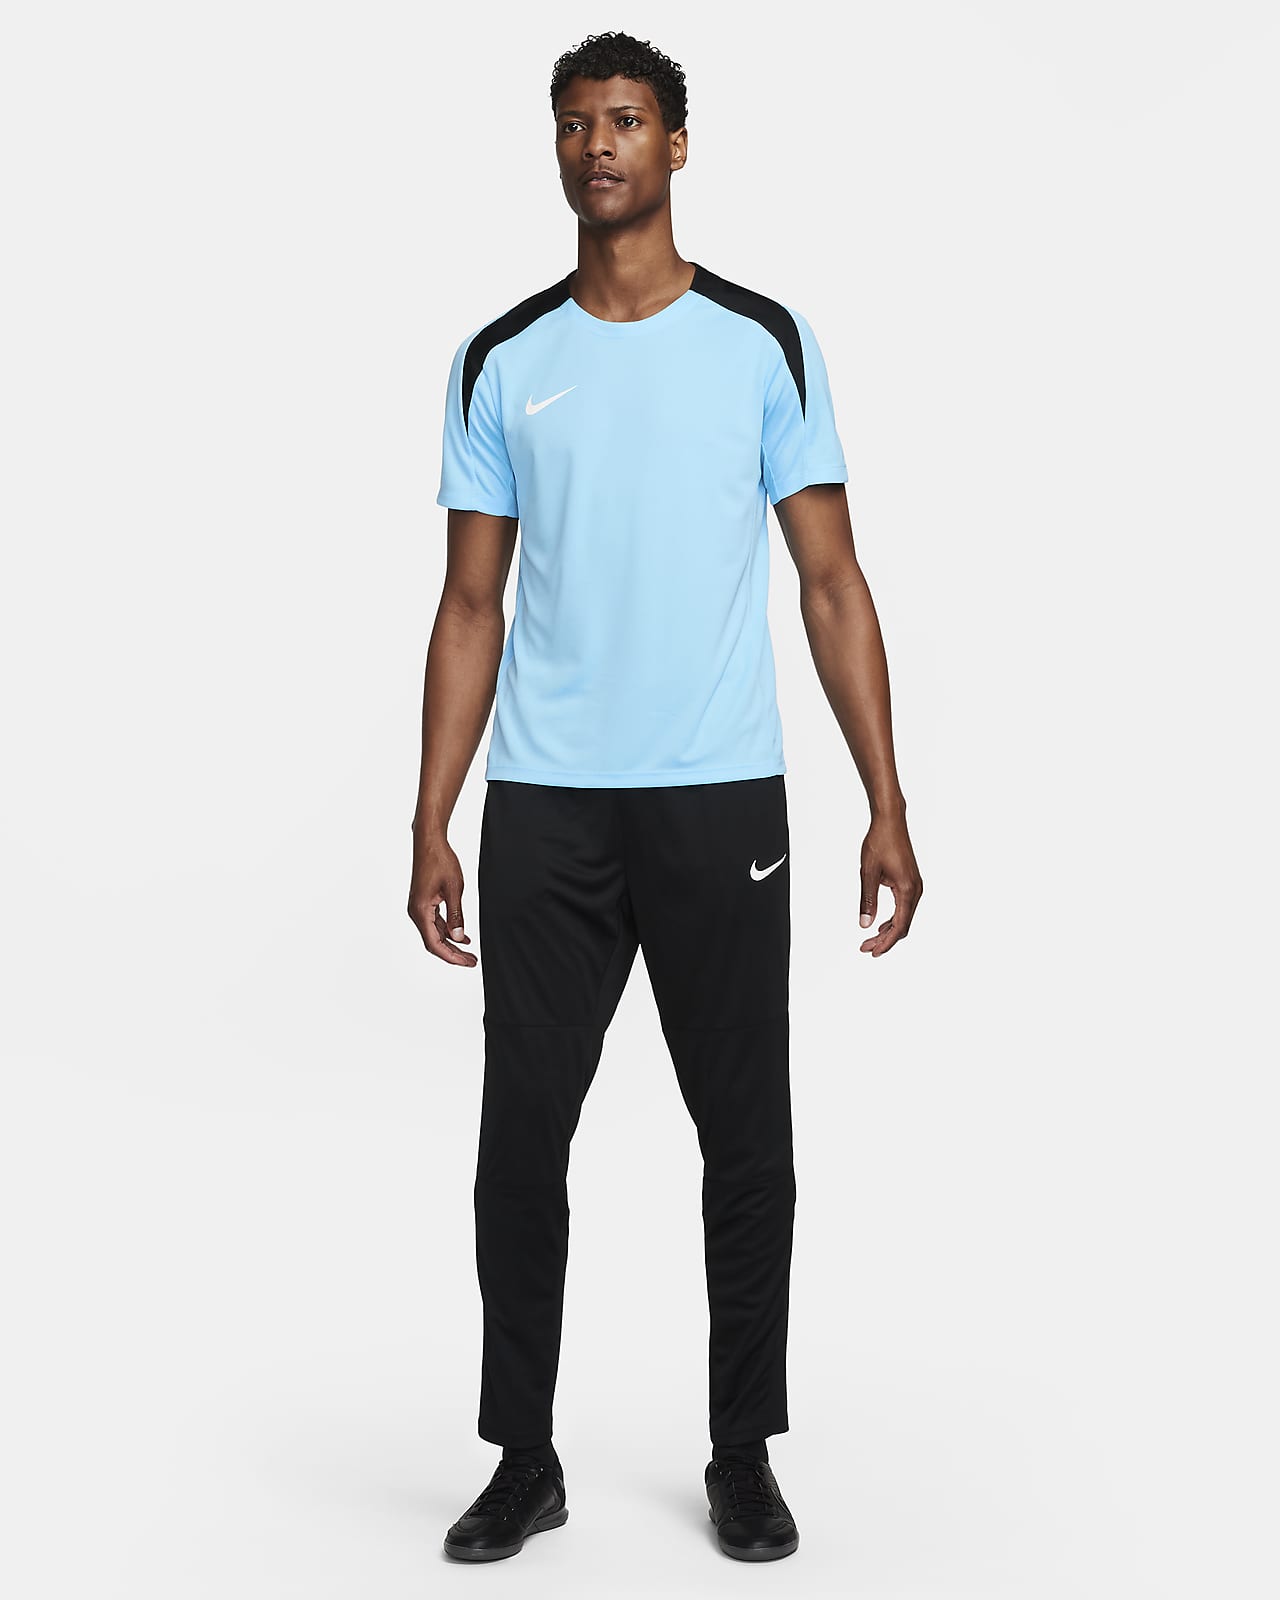 Nike Strike Men's Dri-FIT Short-Sleeve Soccer Top.